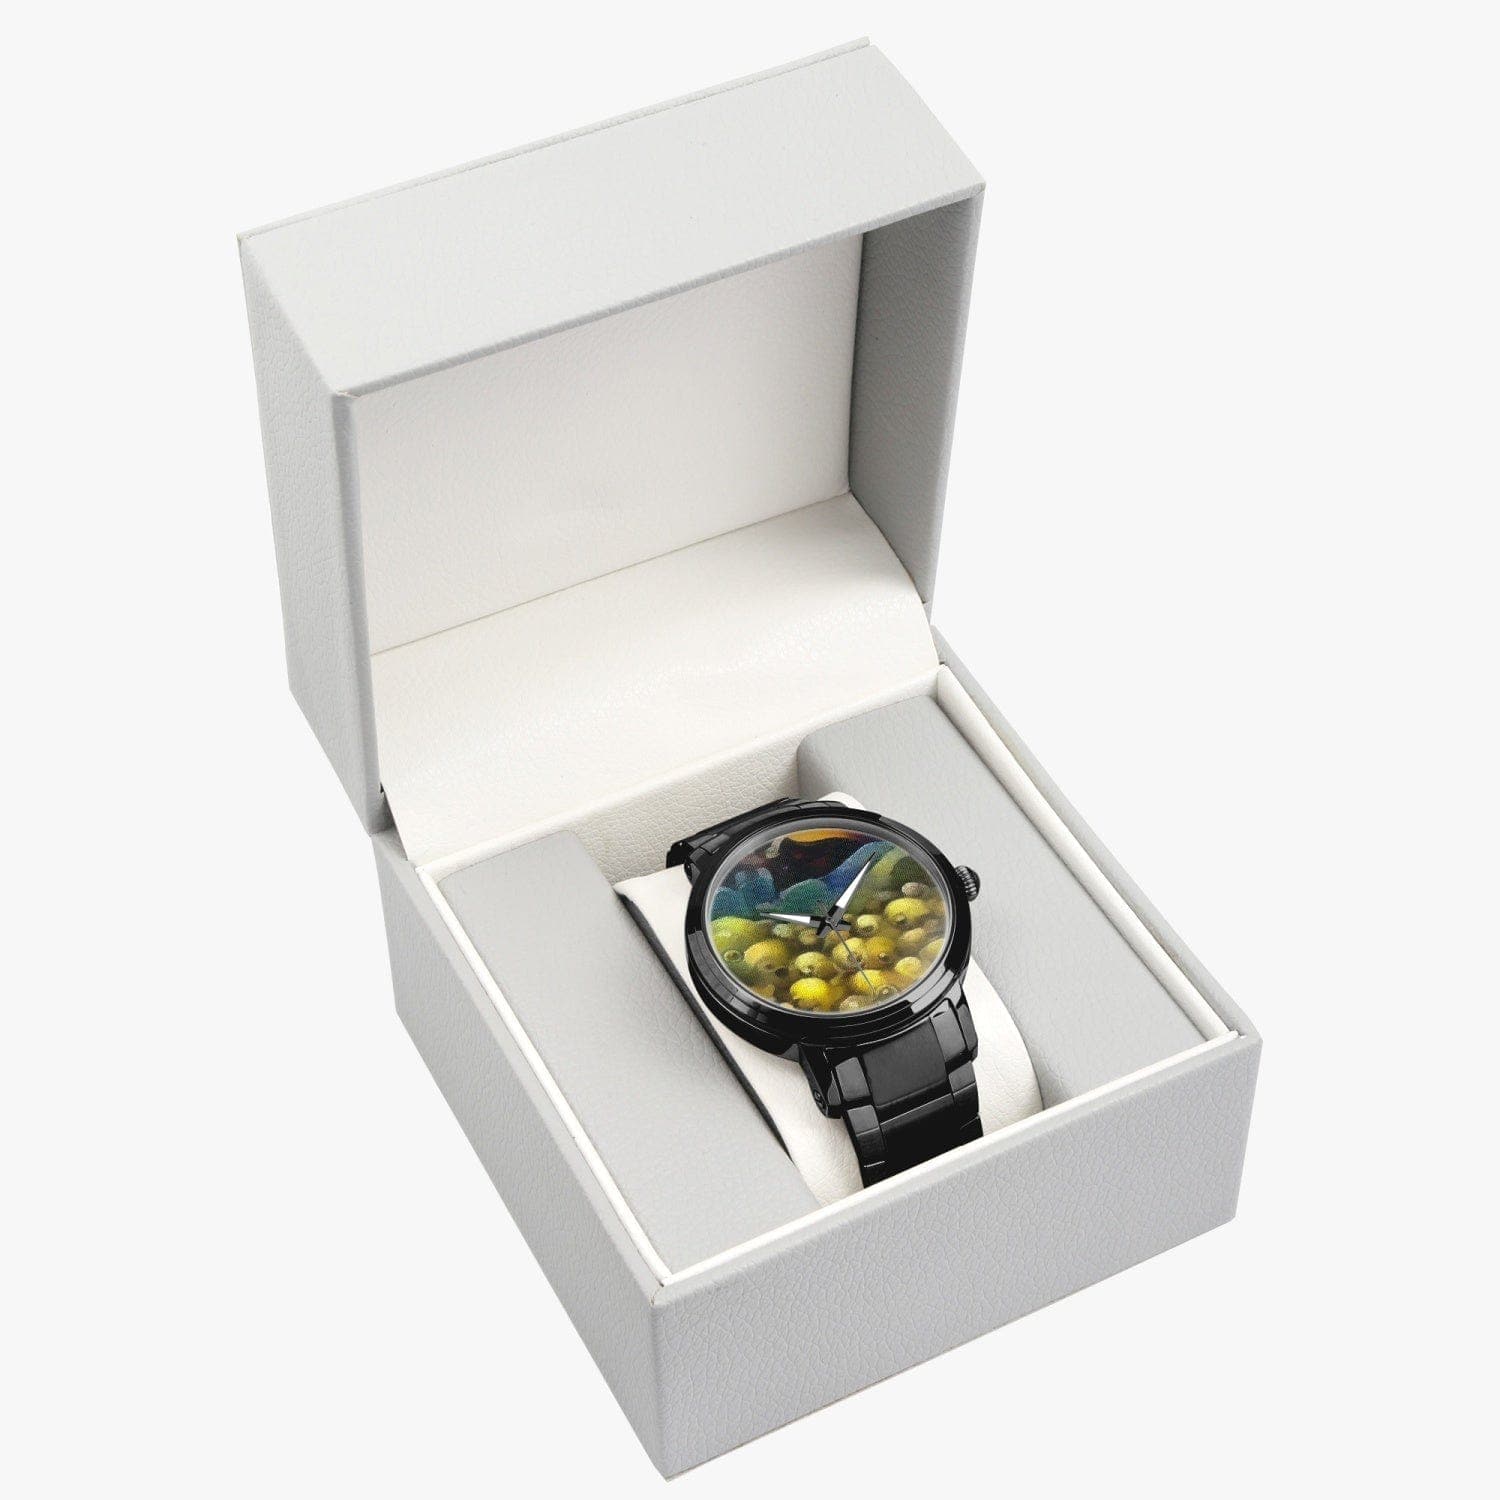 Got Lemons - Steel Strap Automatic Watch, by Sensus Studio Design